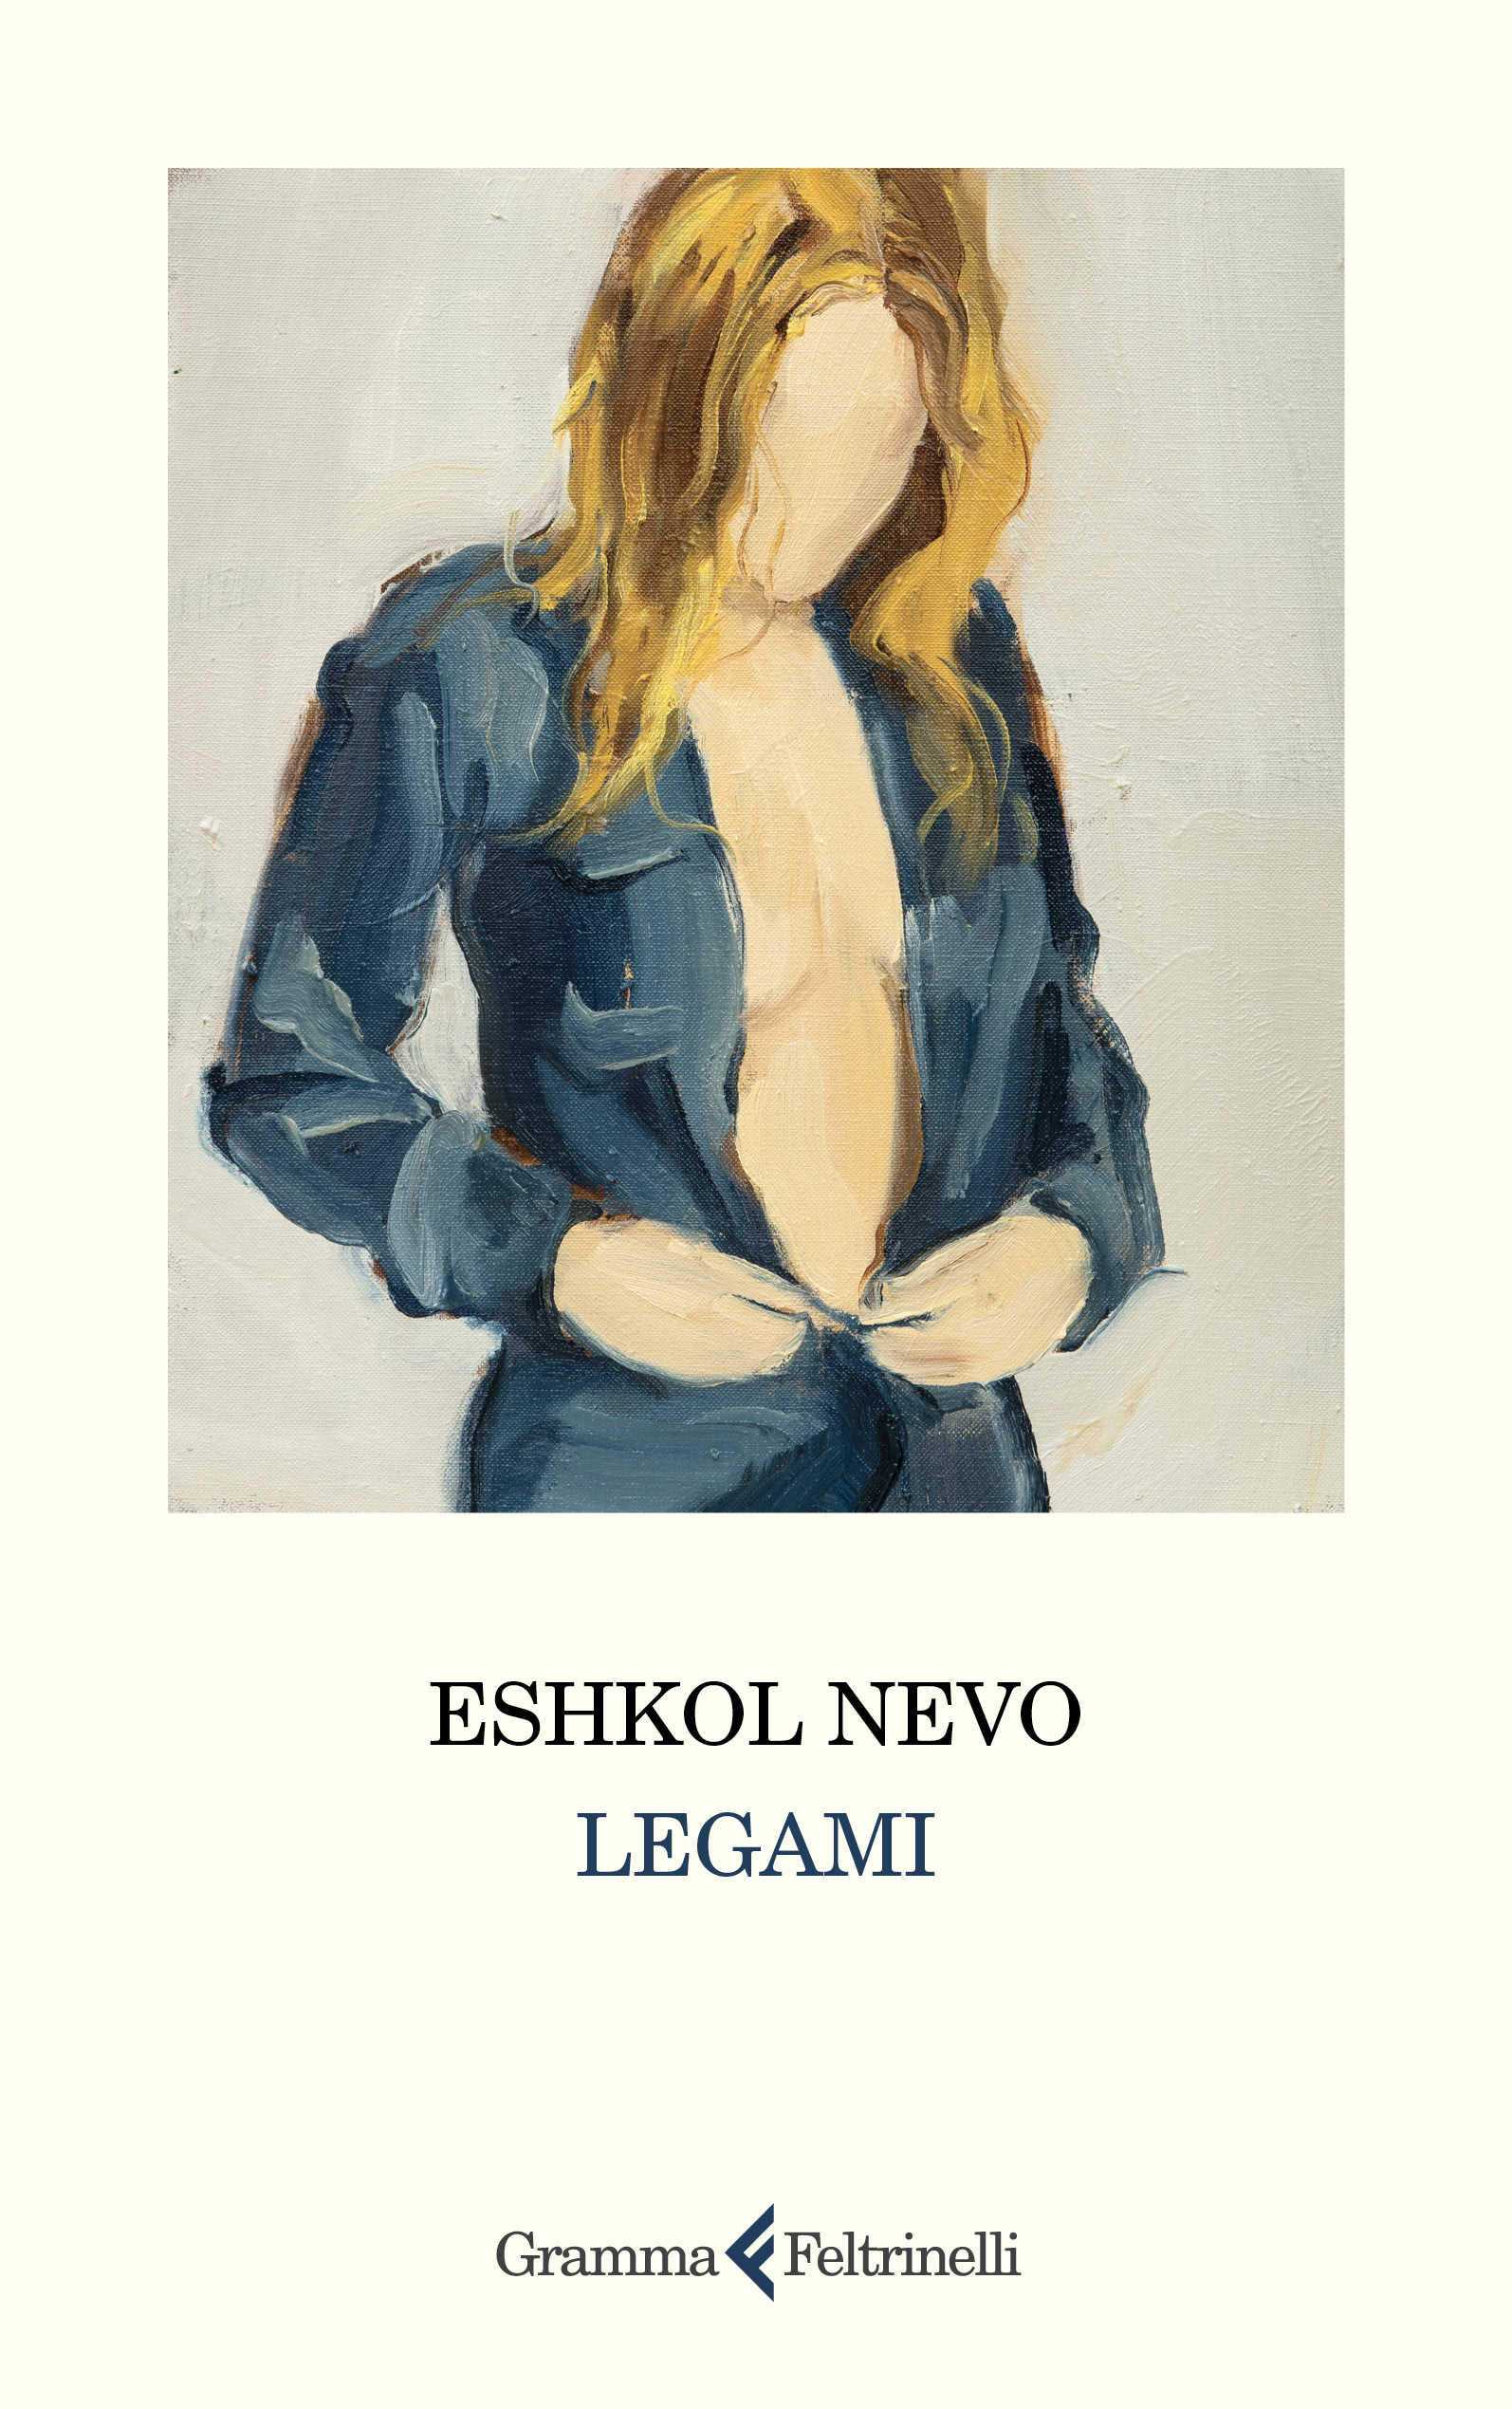 Eshkol Nevo presenta Legami